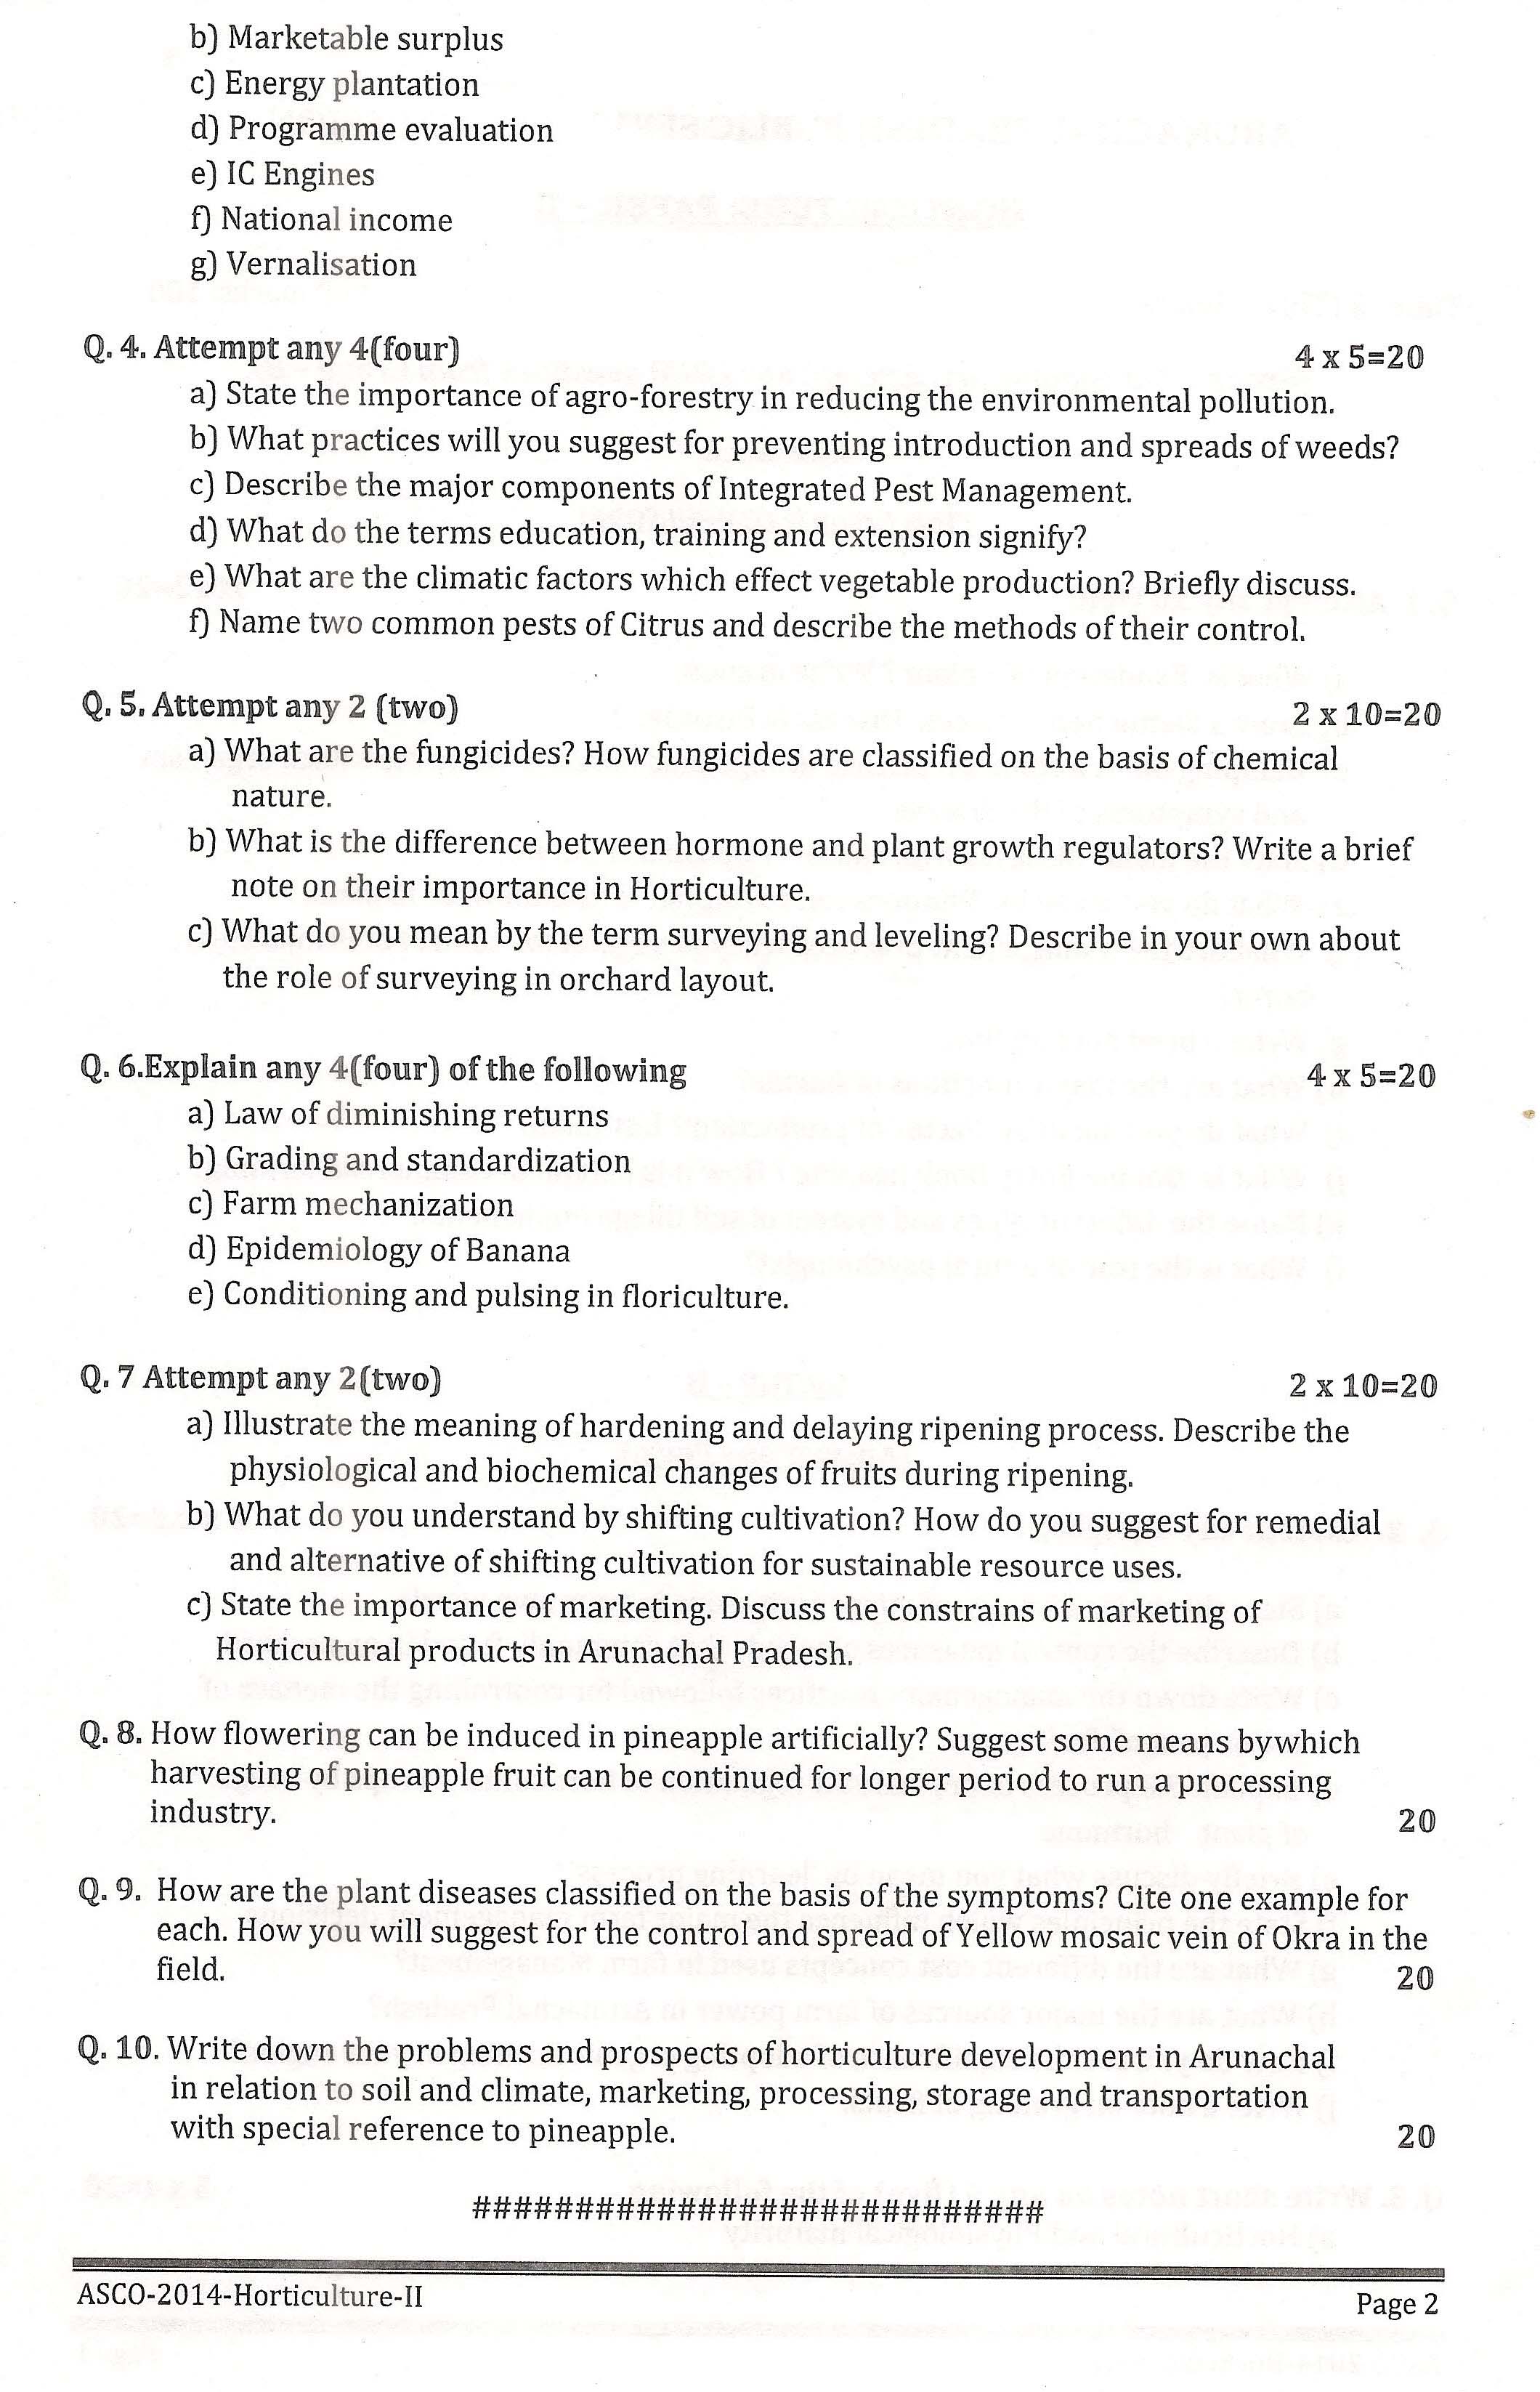 APPSC ASCO Horticulture Paper II Exam Question Paper 2014 2